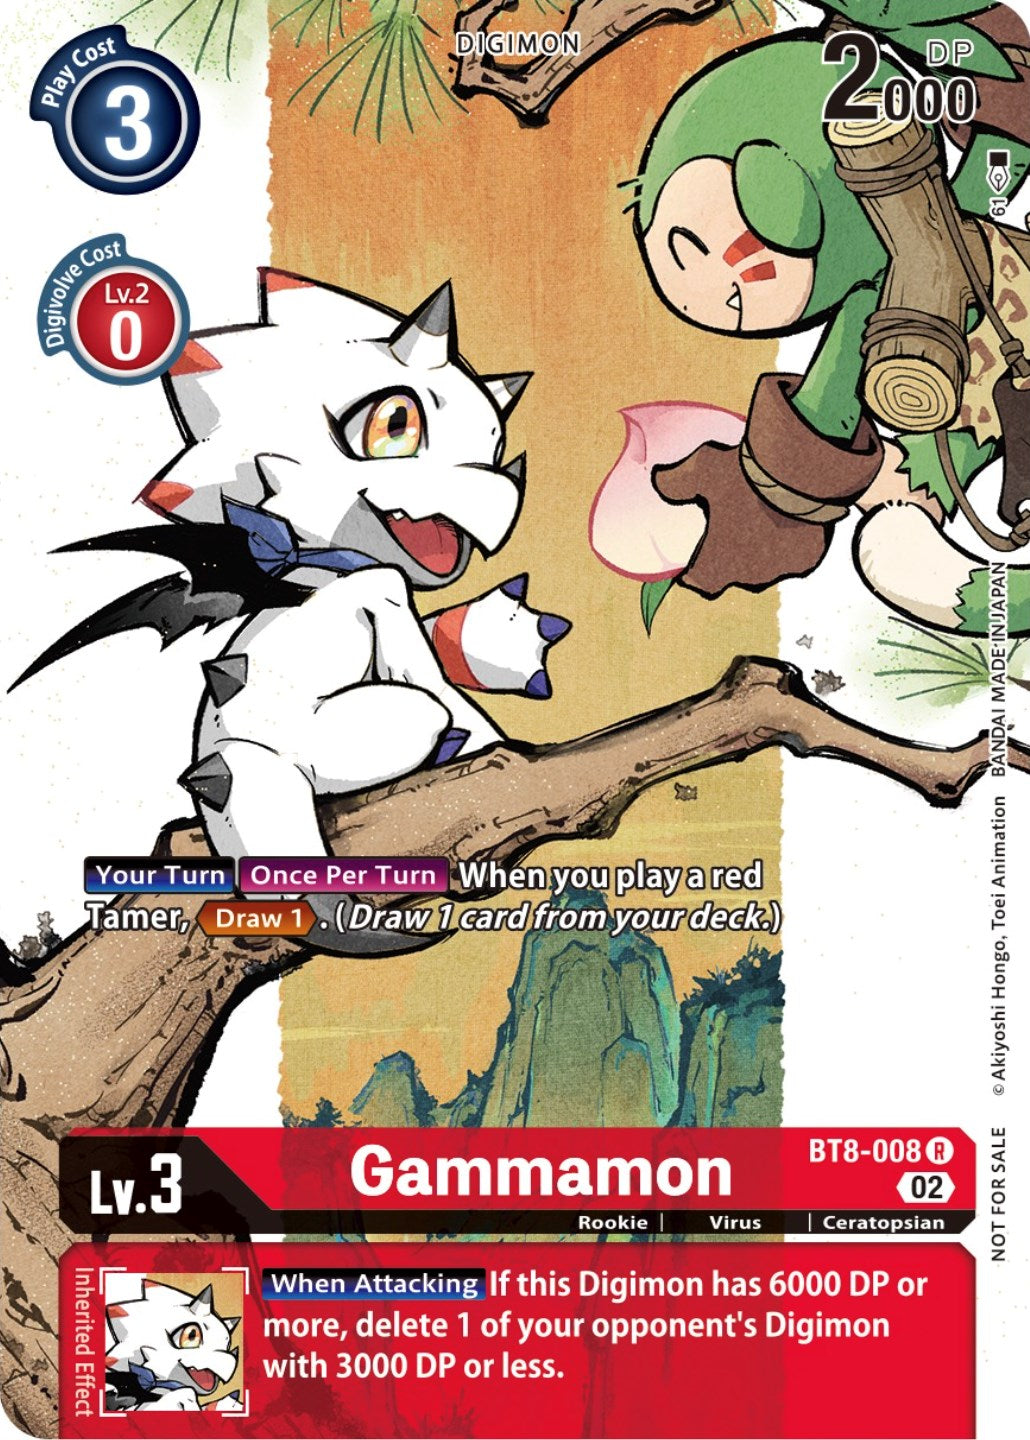 Gammamon [BT8-008] (Digimon Illustration Competition Promotion Pack) [New Awakening Promos] | Devastation Store